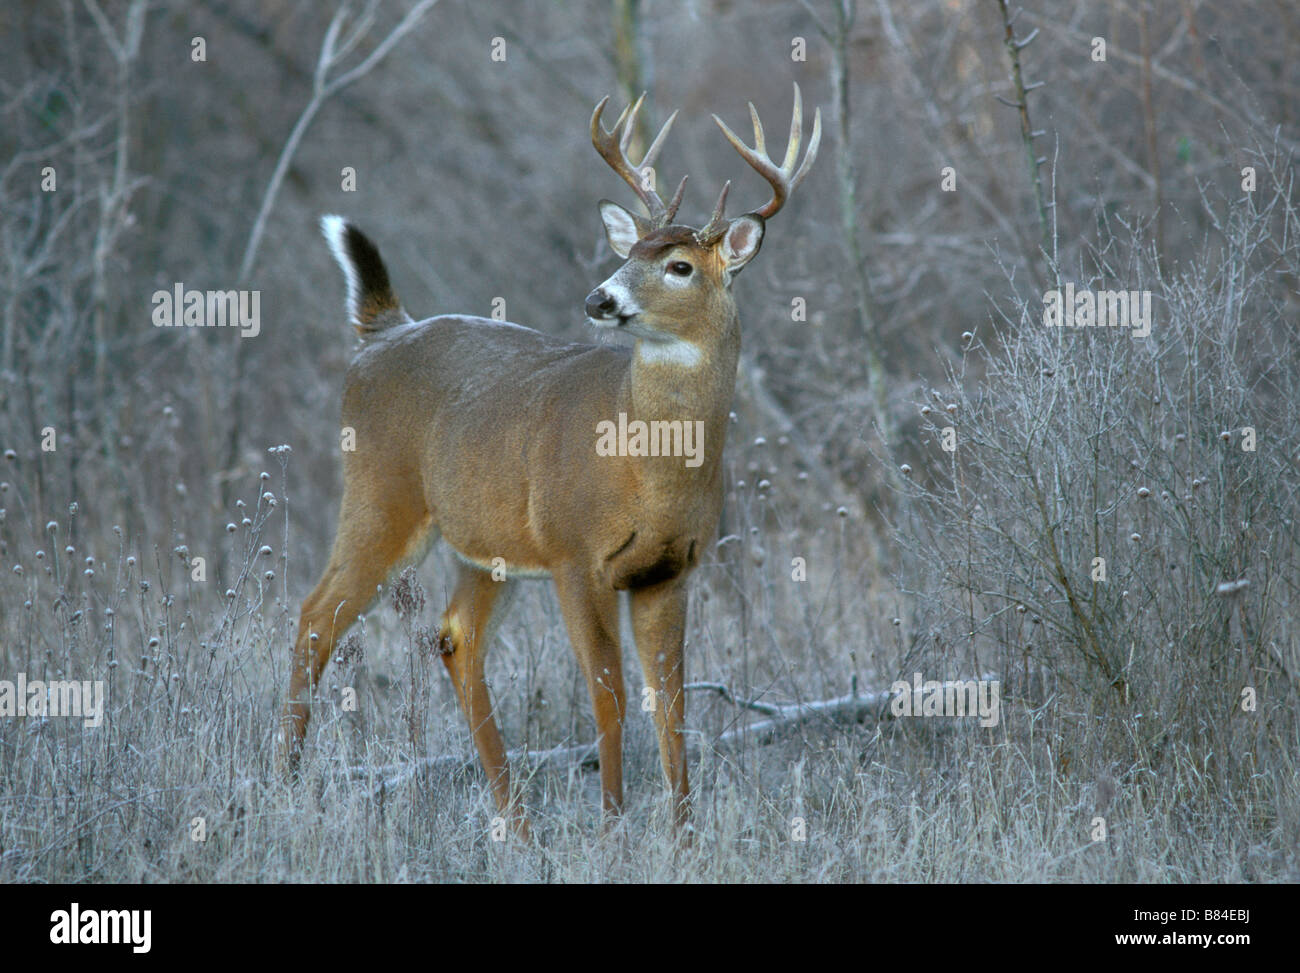 White tailed deer Buck Winter Odocoileus virginianus östlichen Vereinigten Staaten, durch Überspringen Moody/Dembinsky Foto Assoc Stockfoto